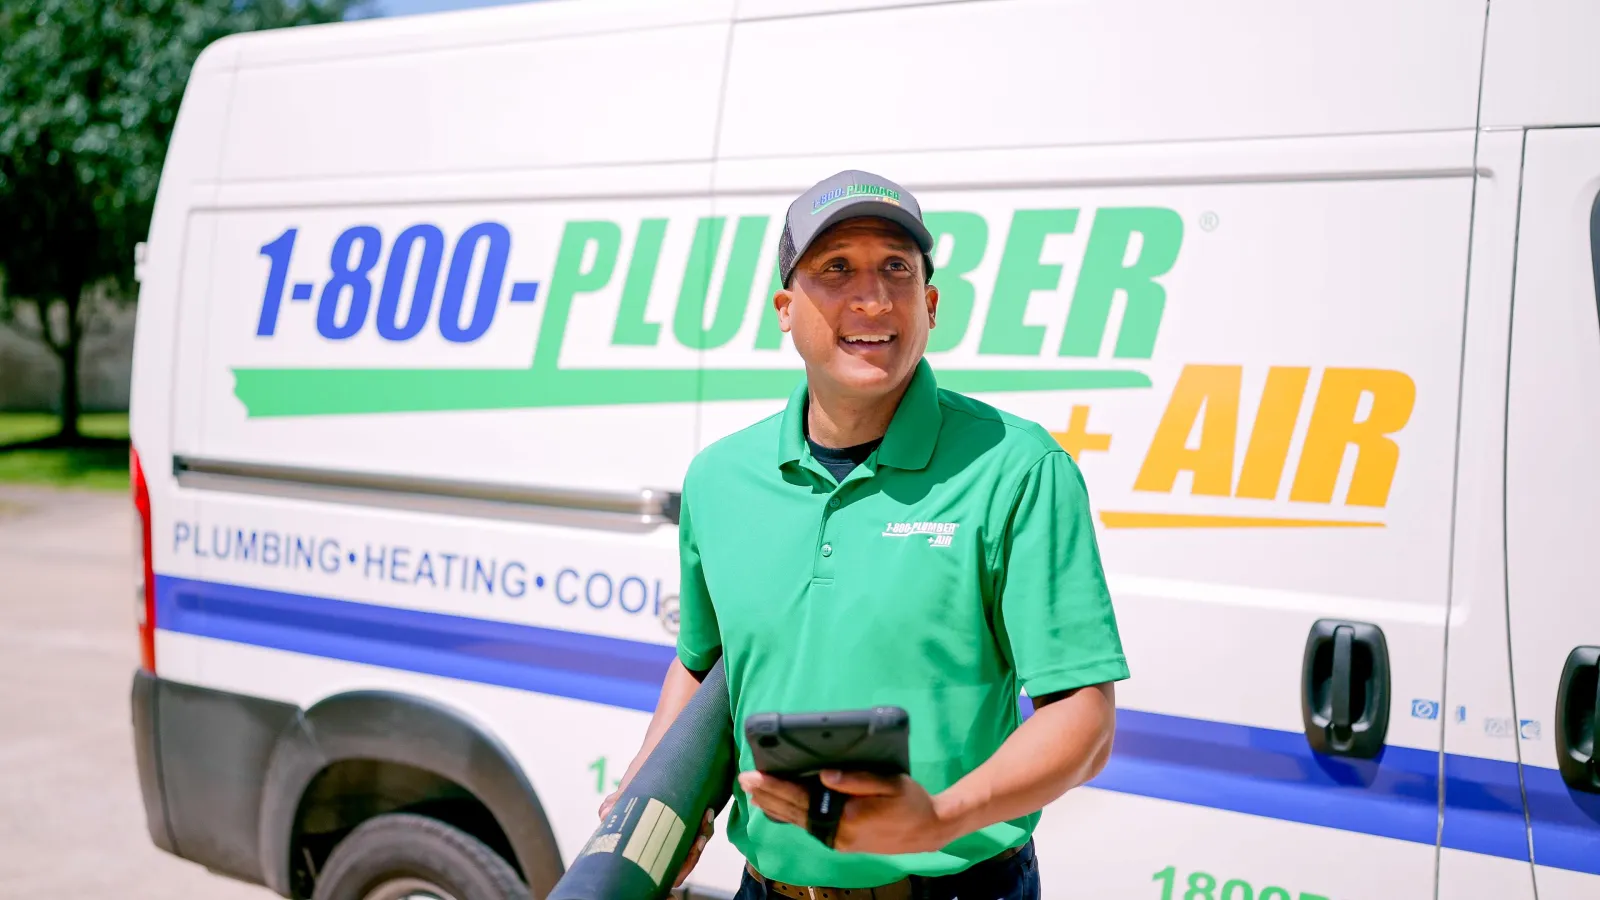 A 1-800-Plumber +Air of New Braunfels heating technician and a van